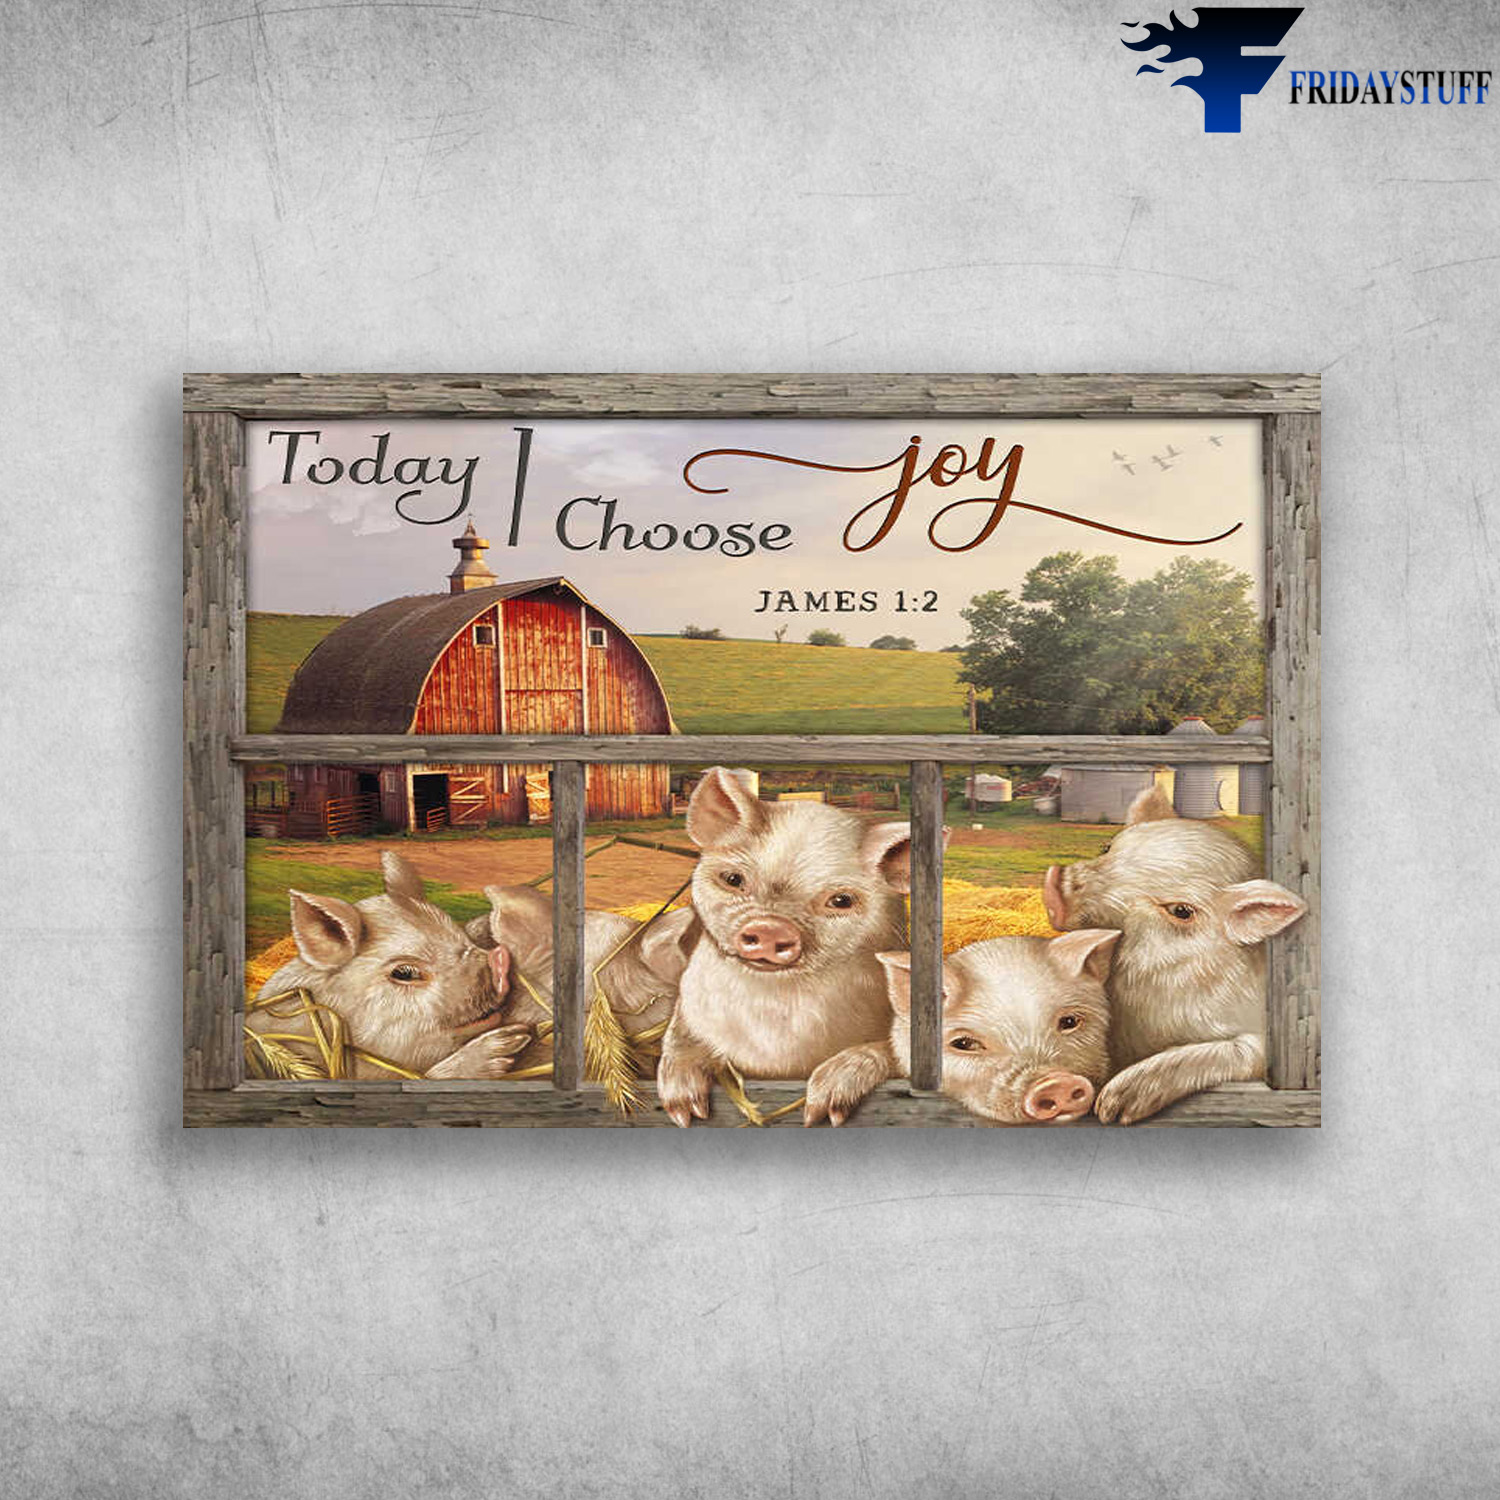 Pigs Outside The Window - To Day I Choose Joy, Farmhoyse